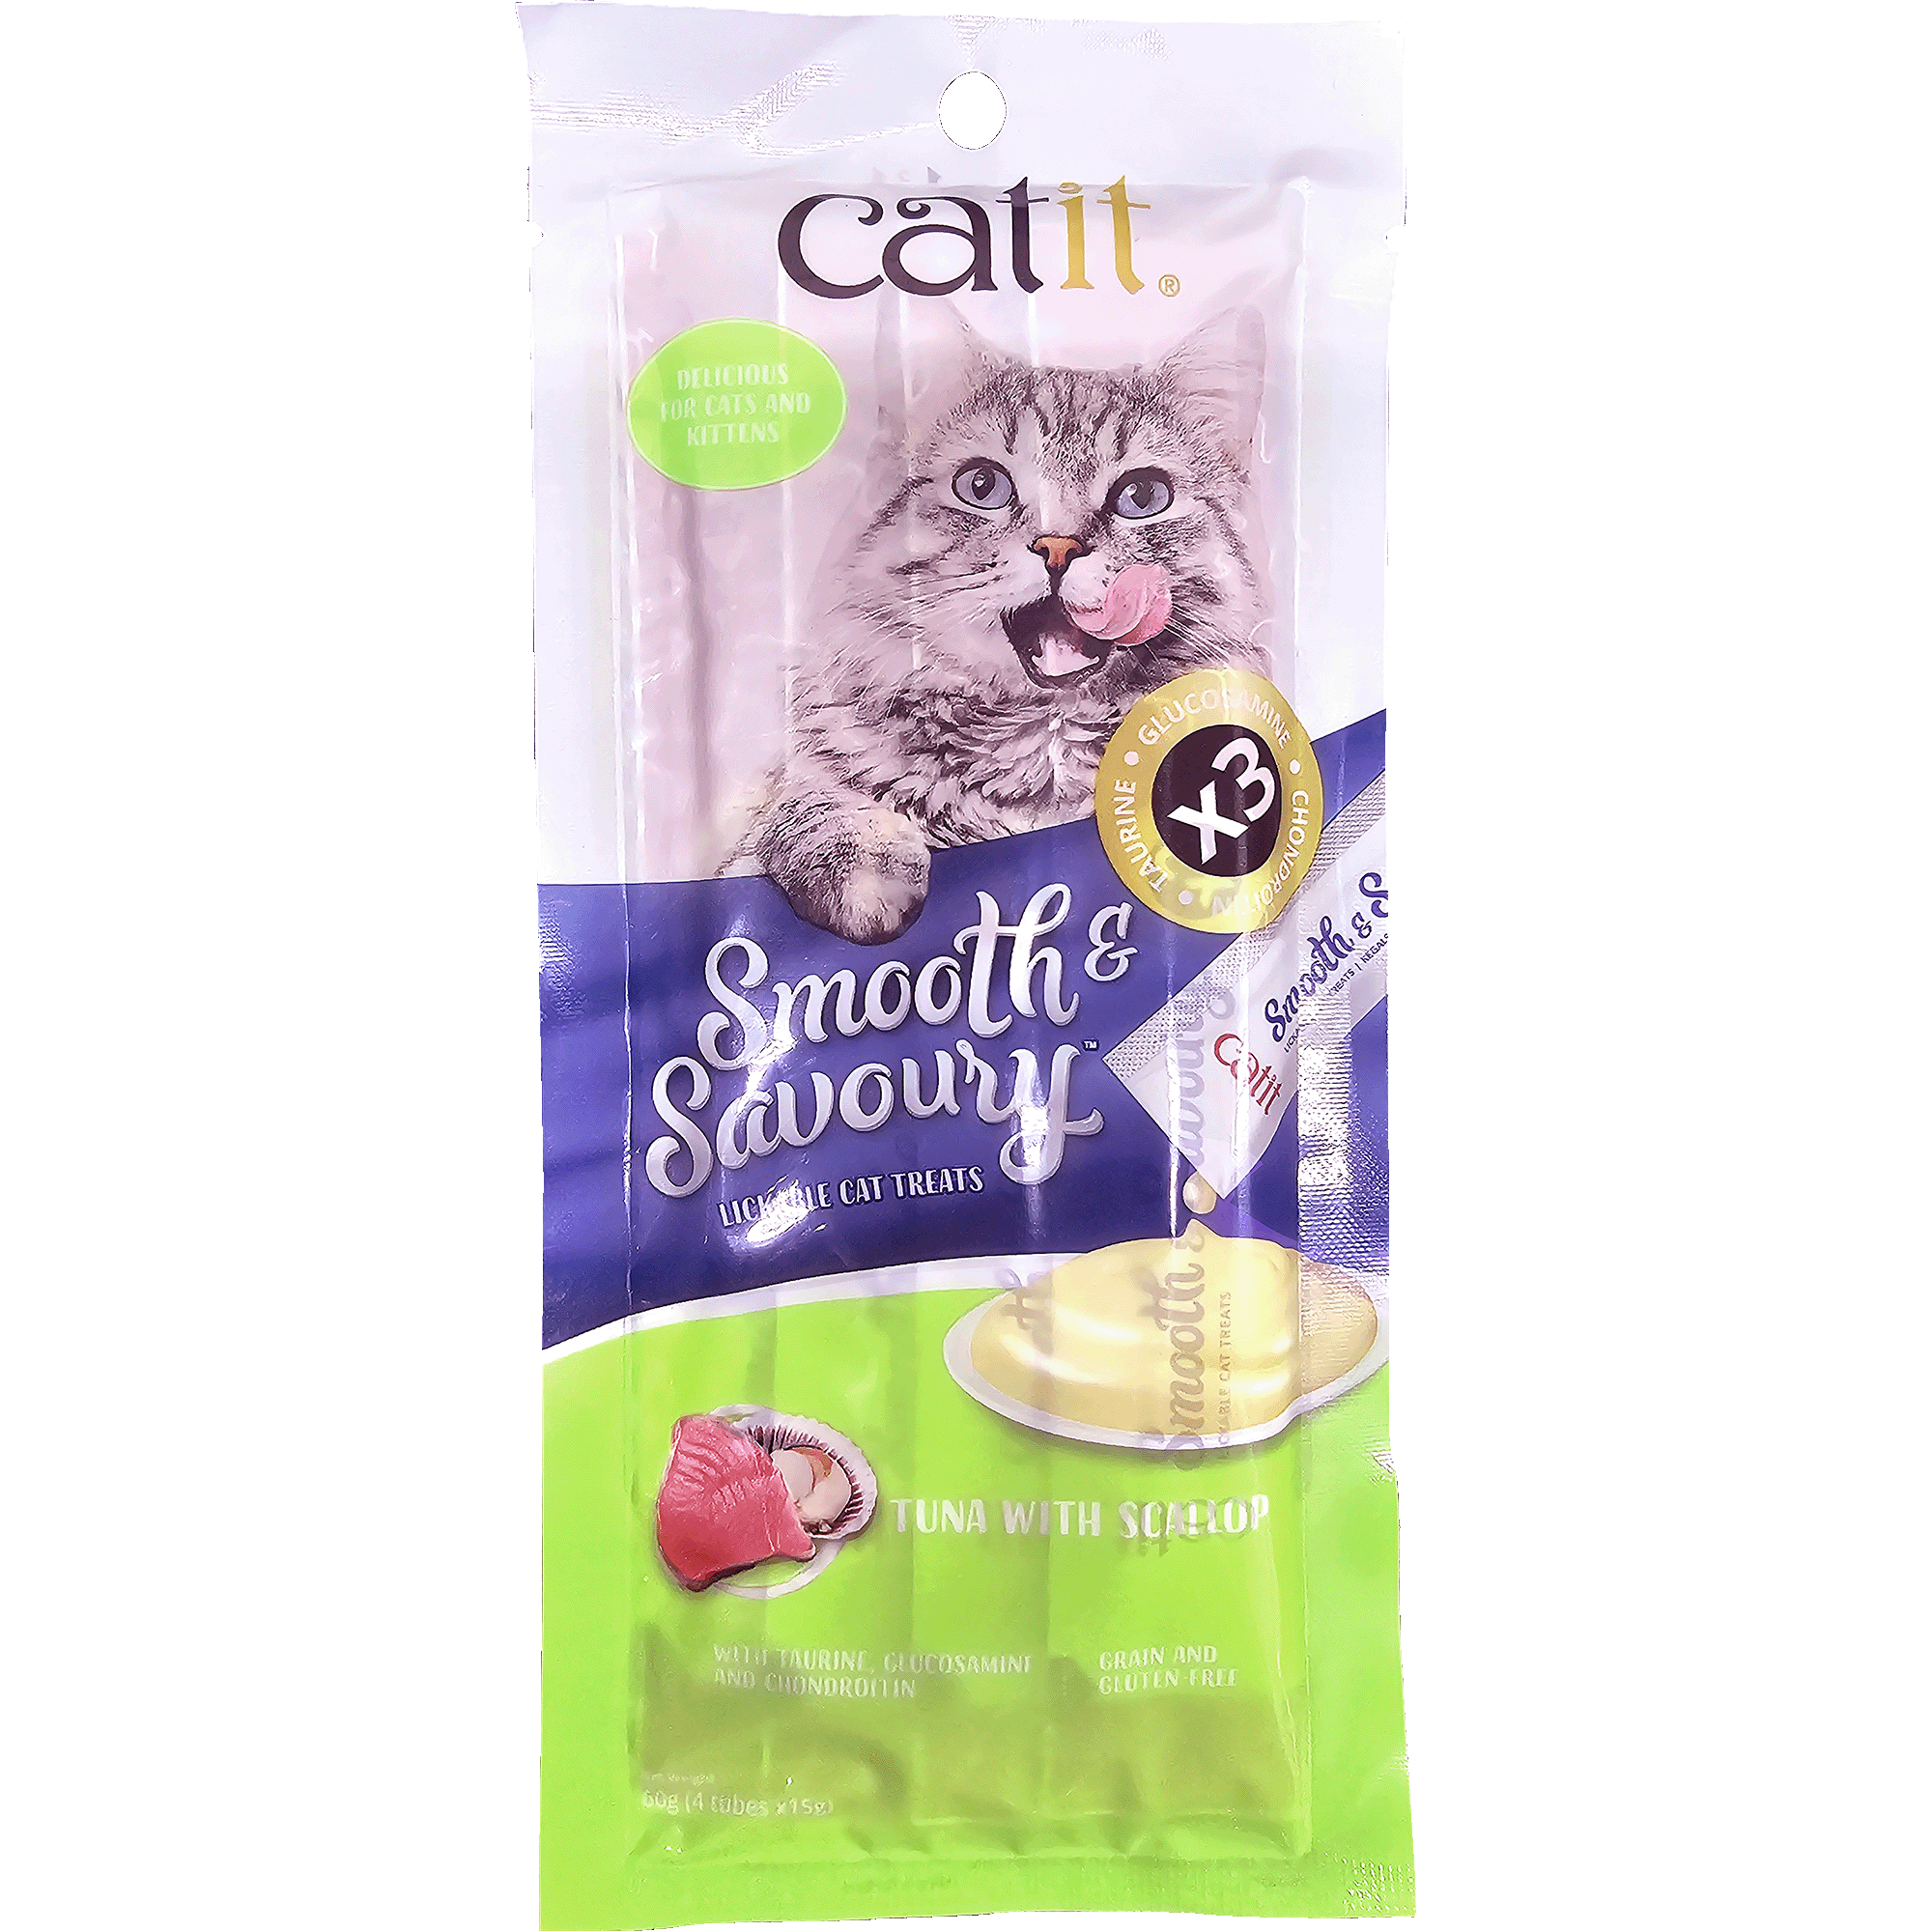 Catit Cat Treats - Smooth & Savoury Tuna with Scallop 15gx4 tubes